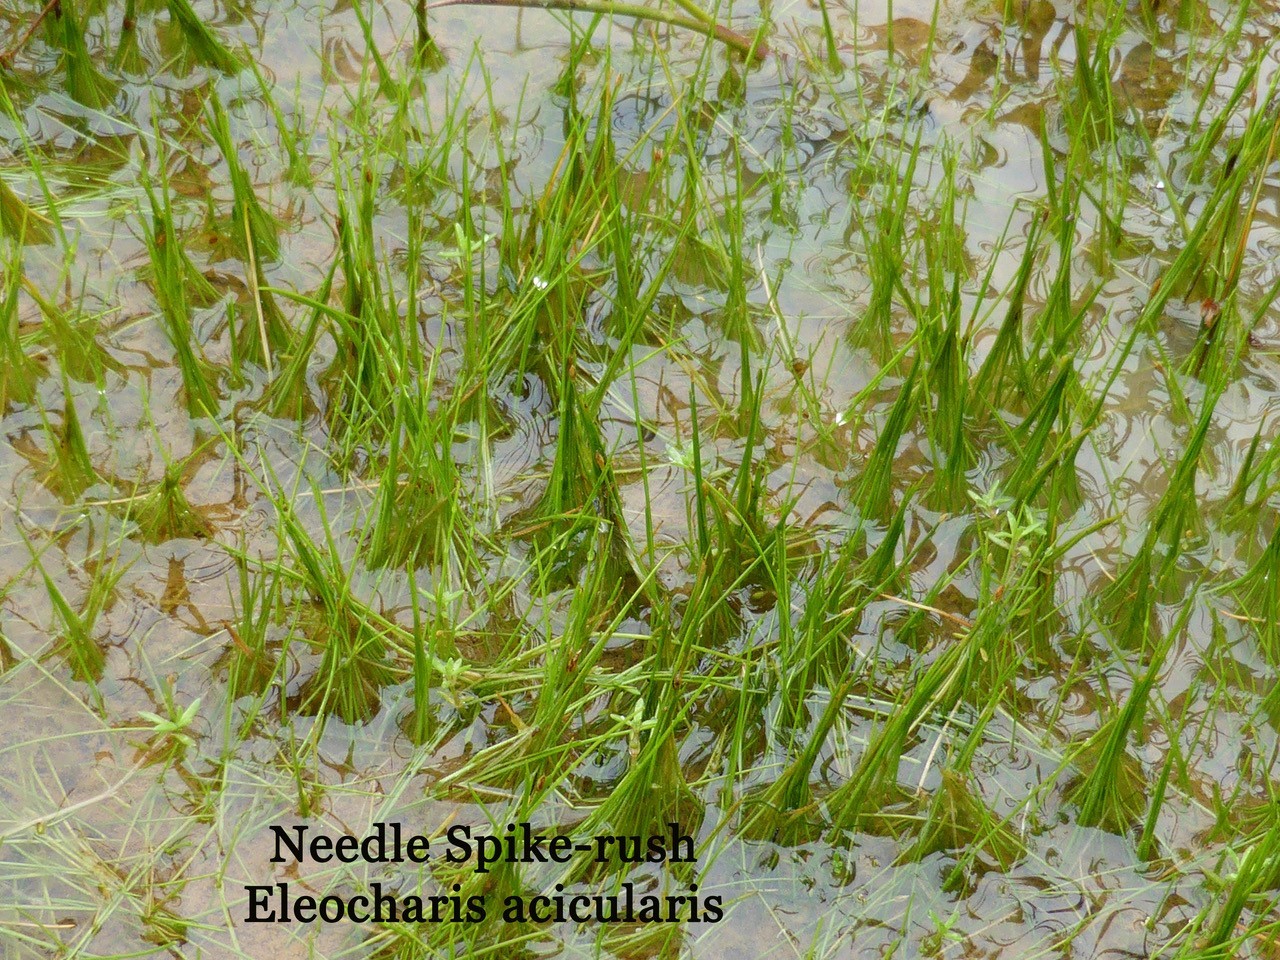 Needle Spike Rush (Eleocharis acicularis).